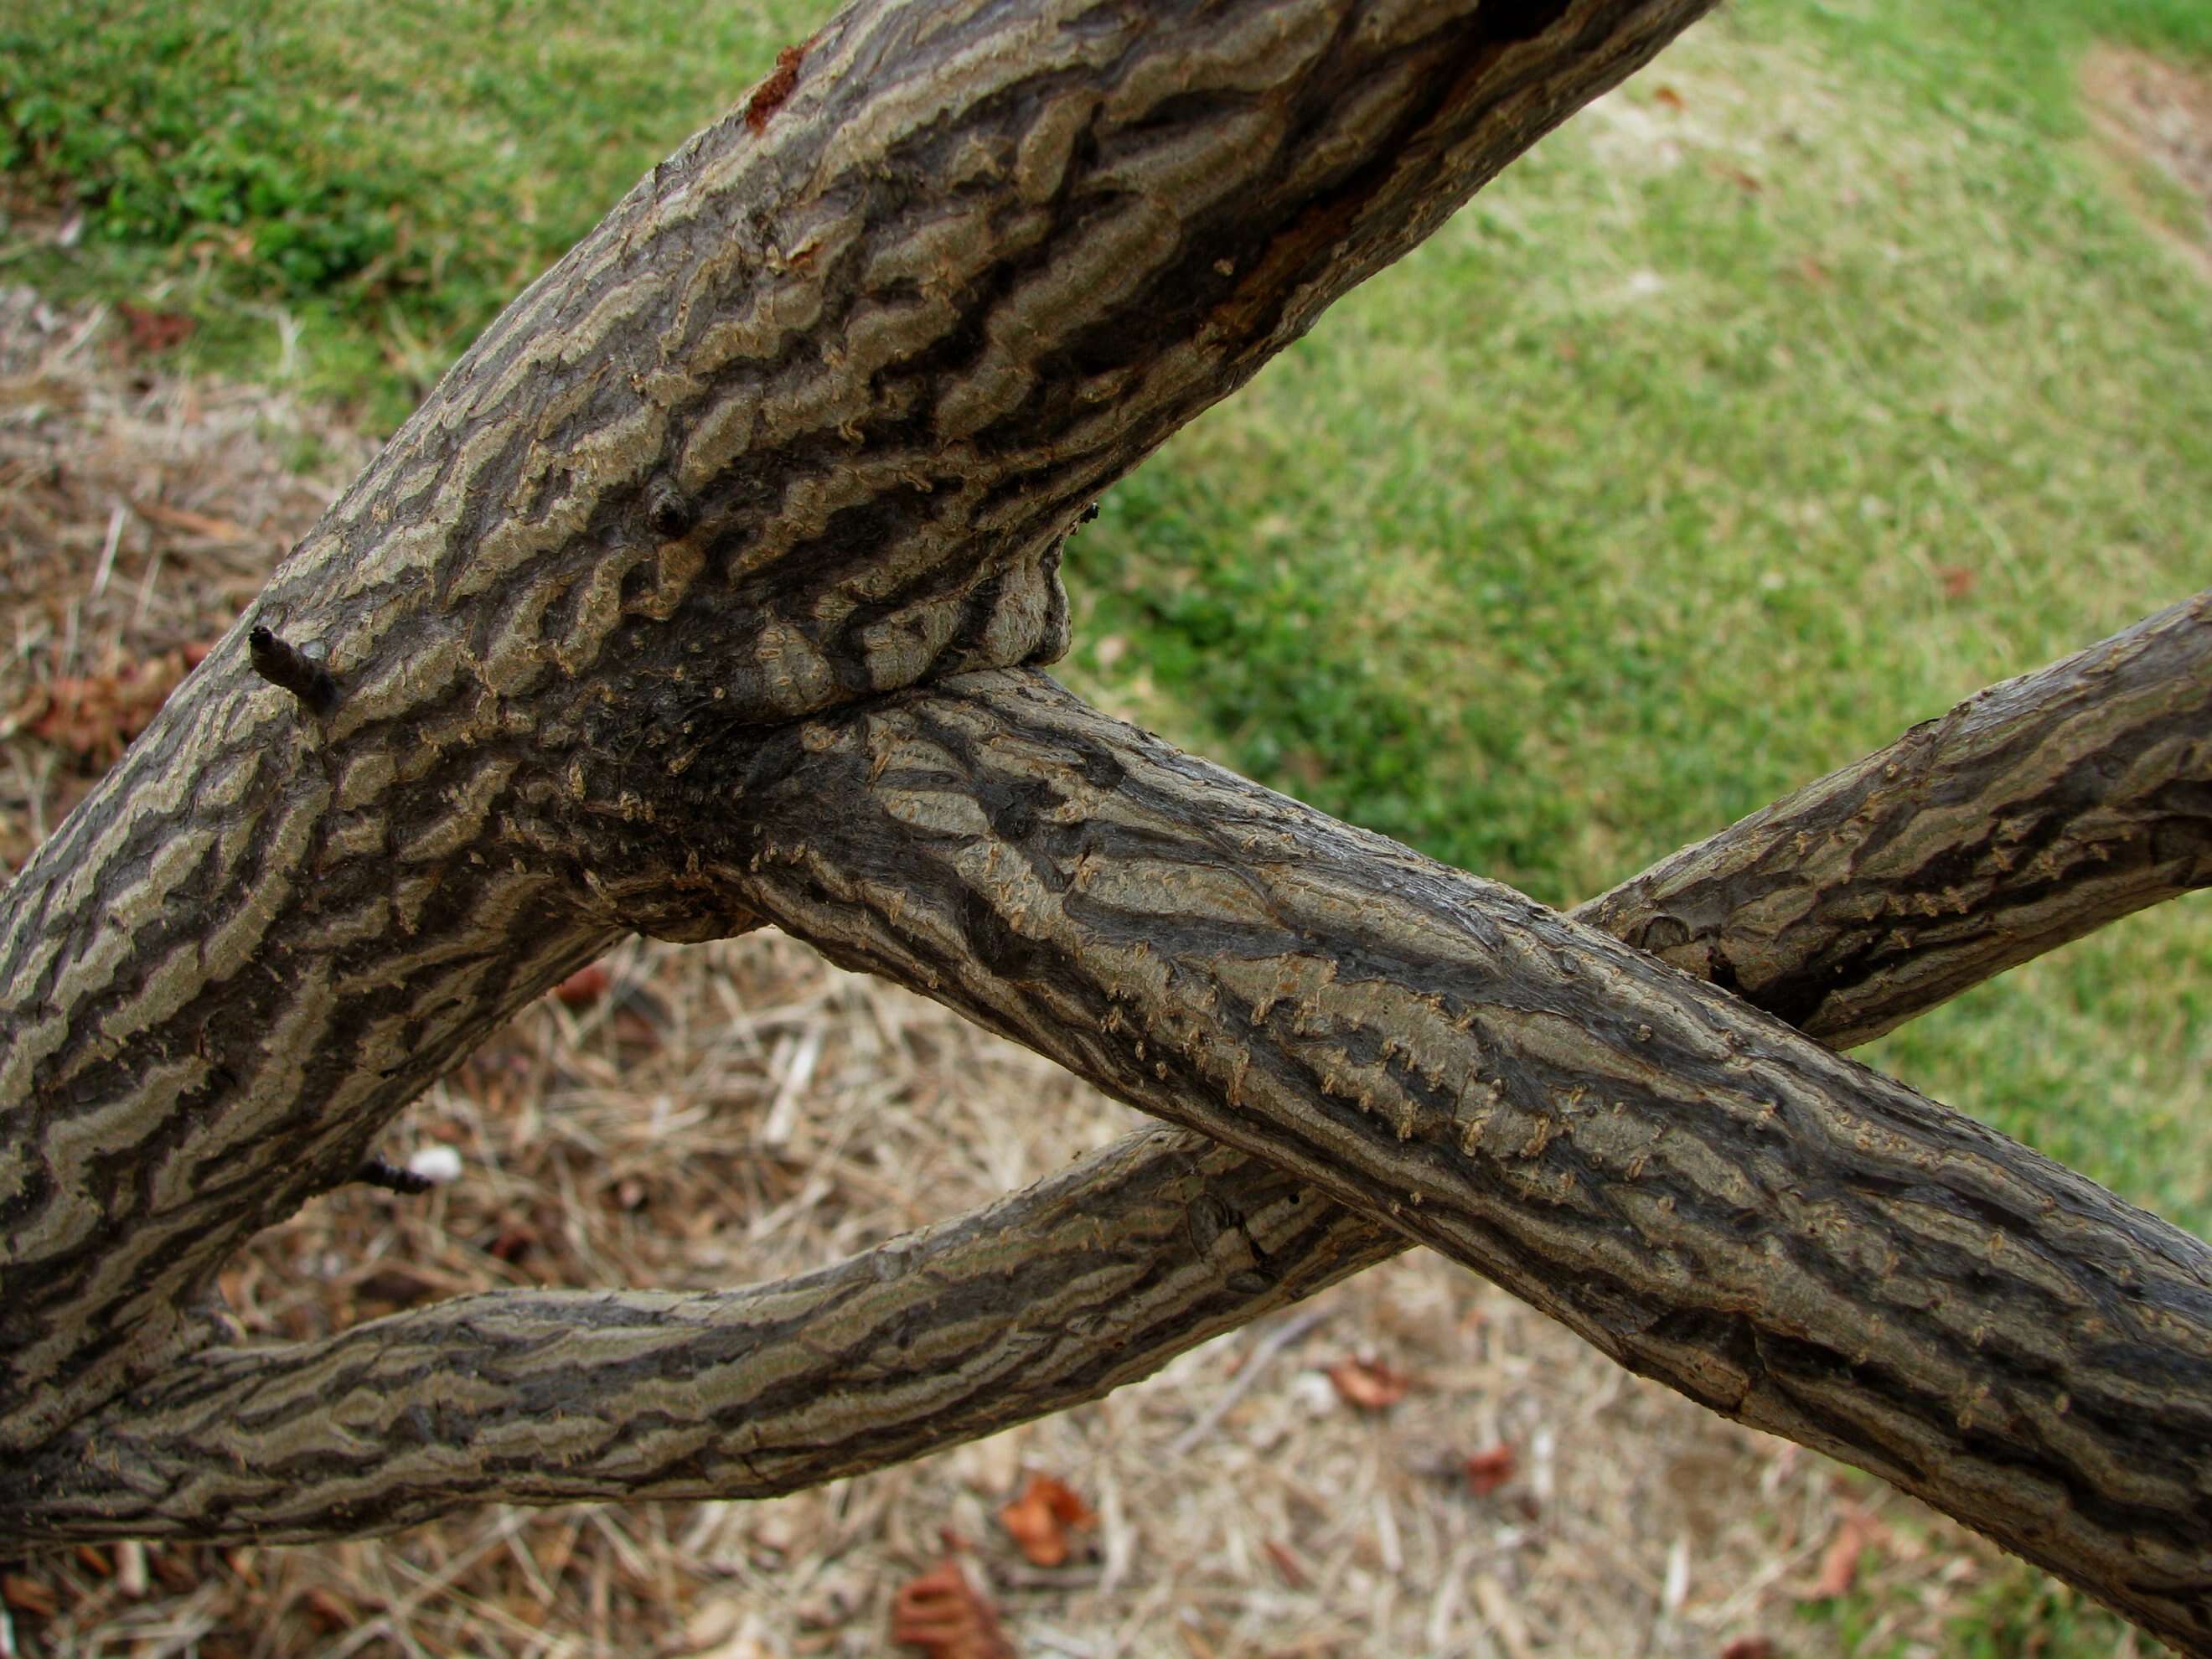 Image of treecotton